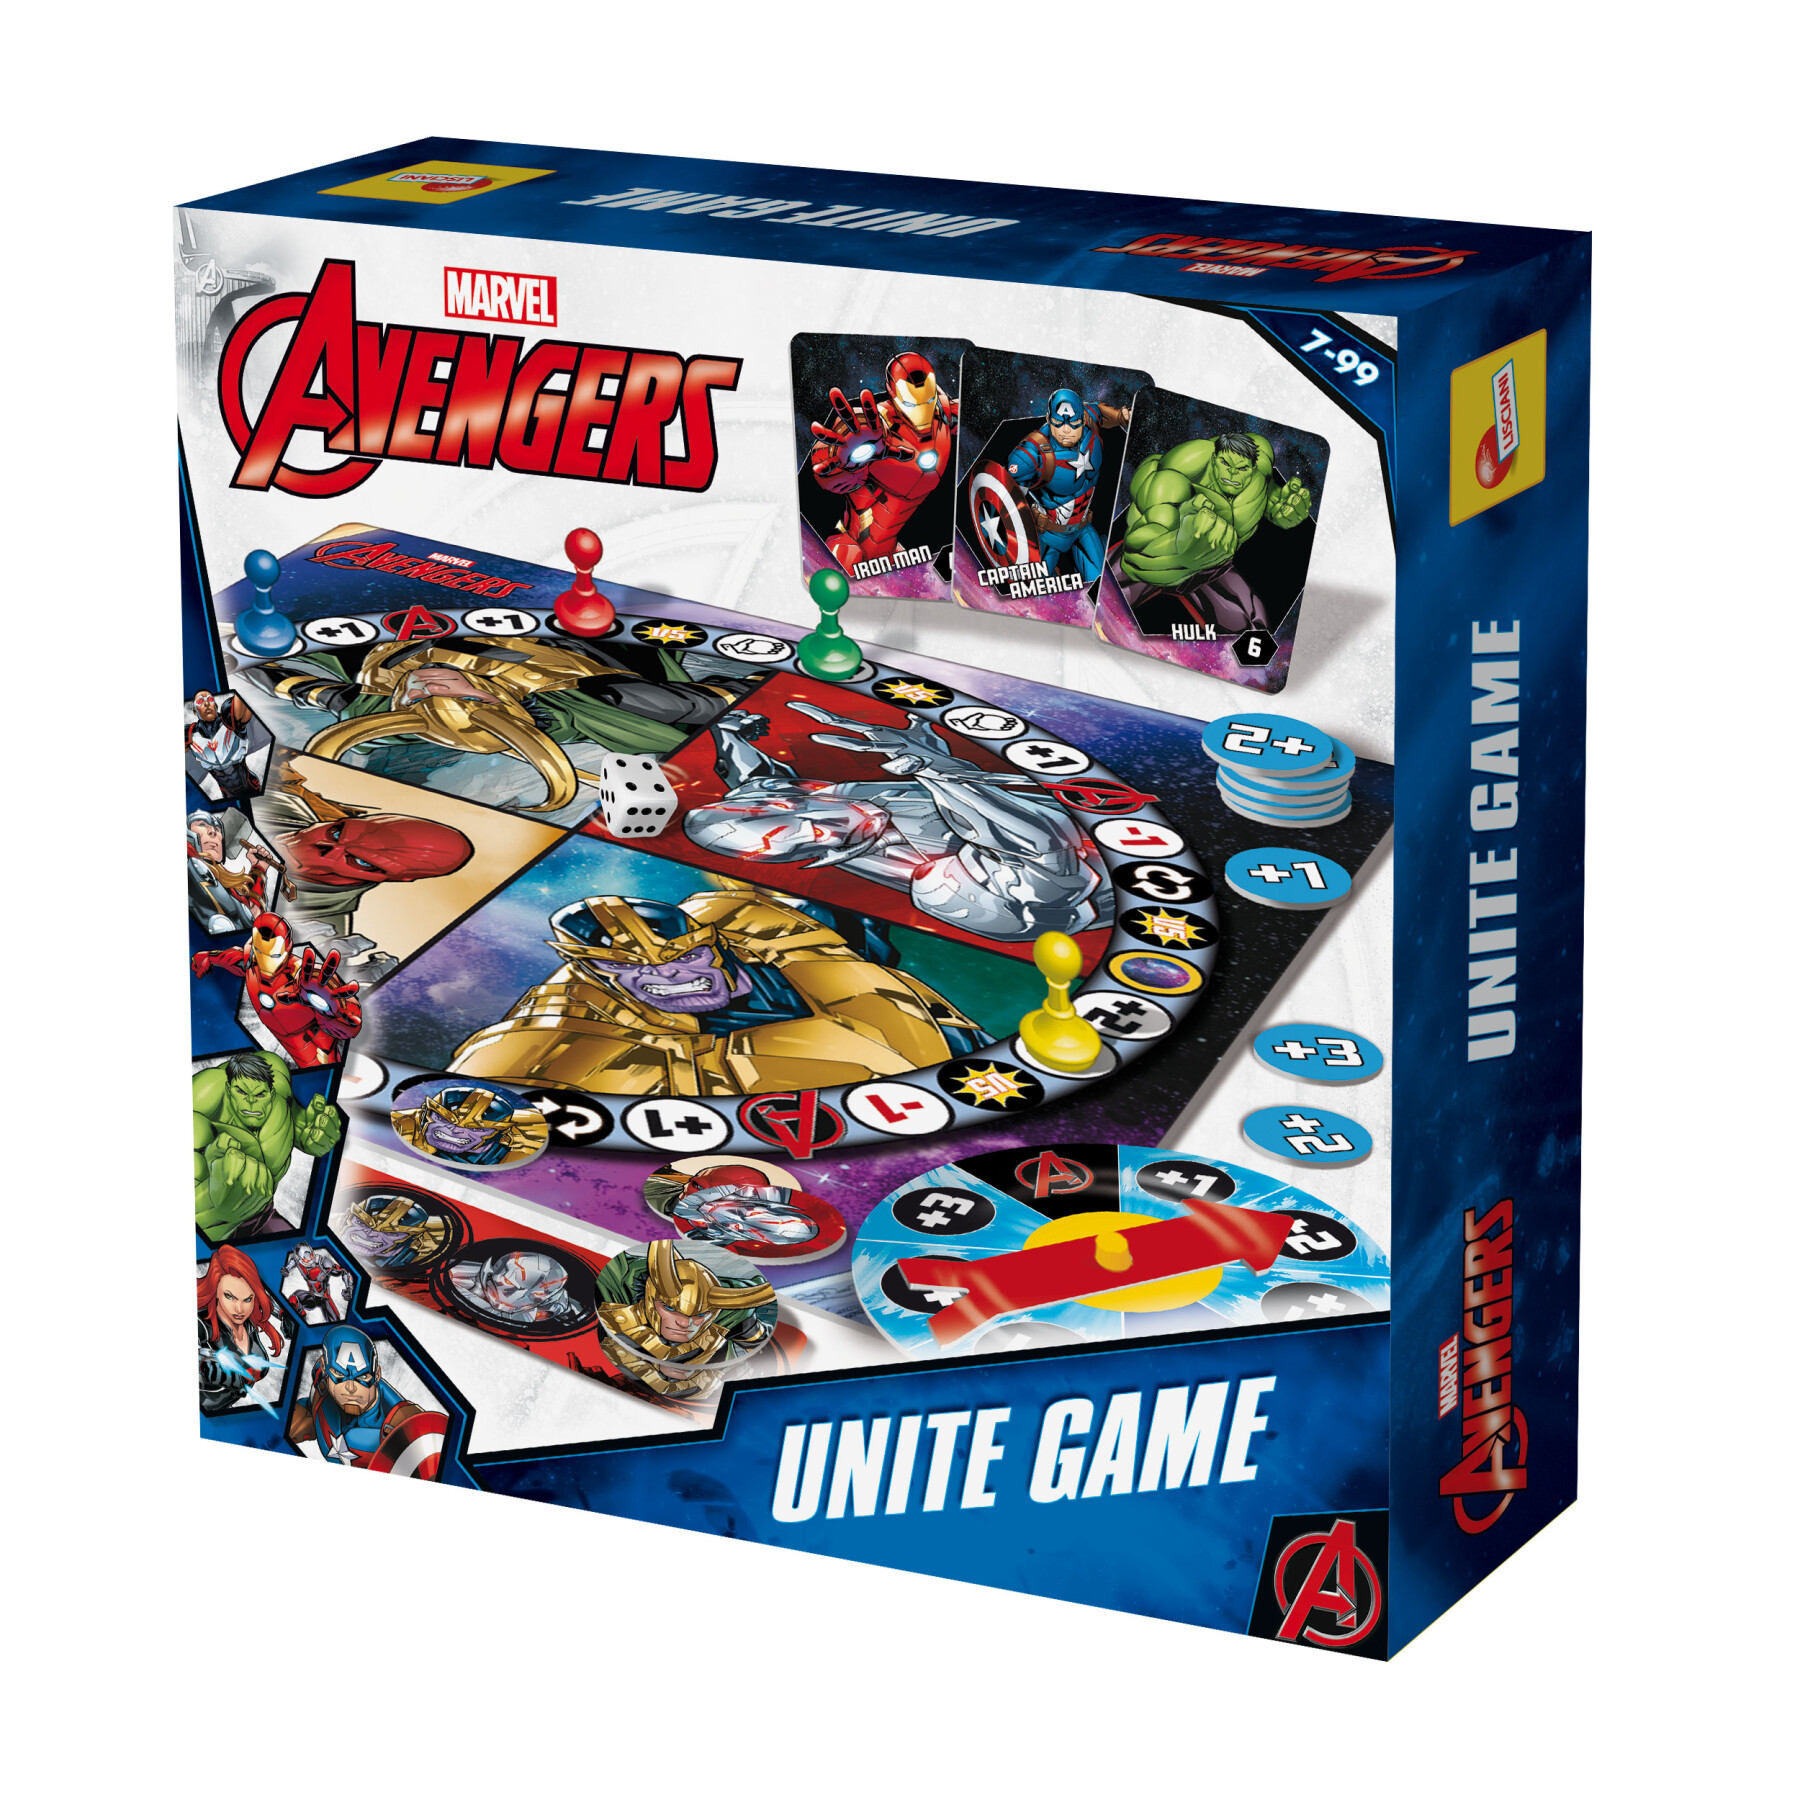 Avengers unite game - LISCIANI, Avengers